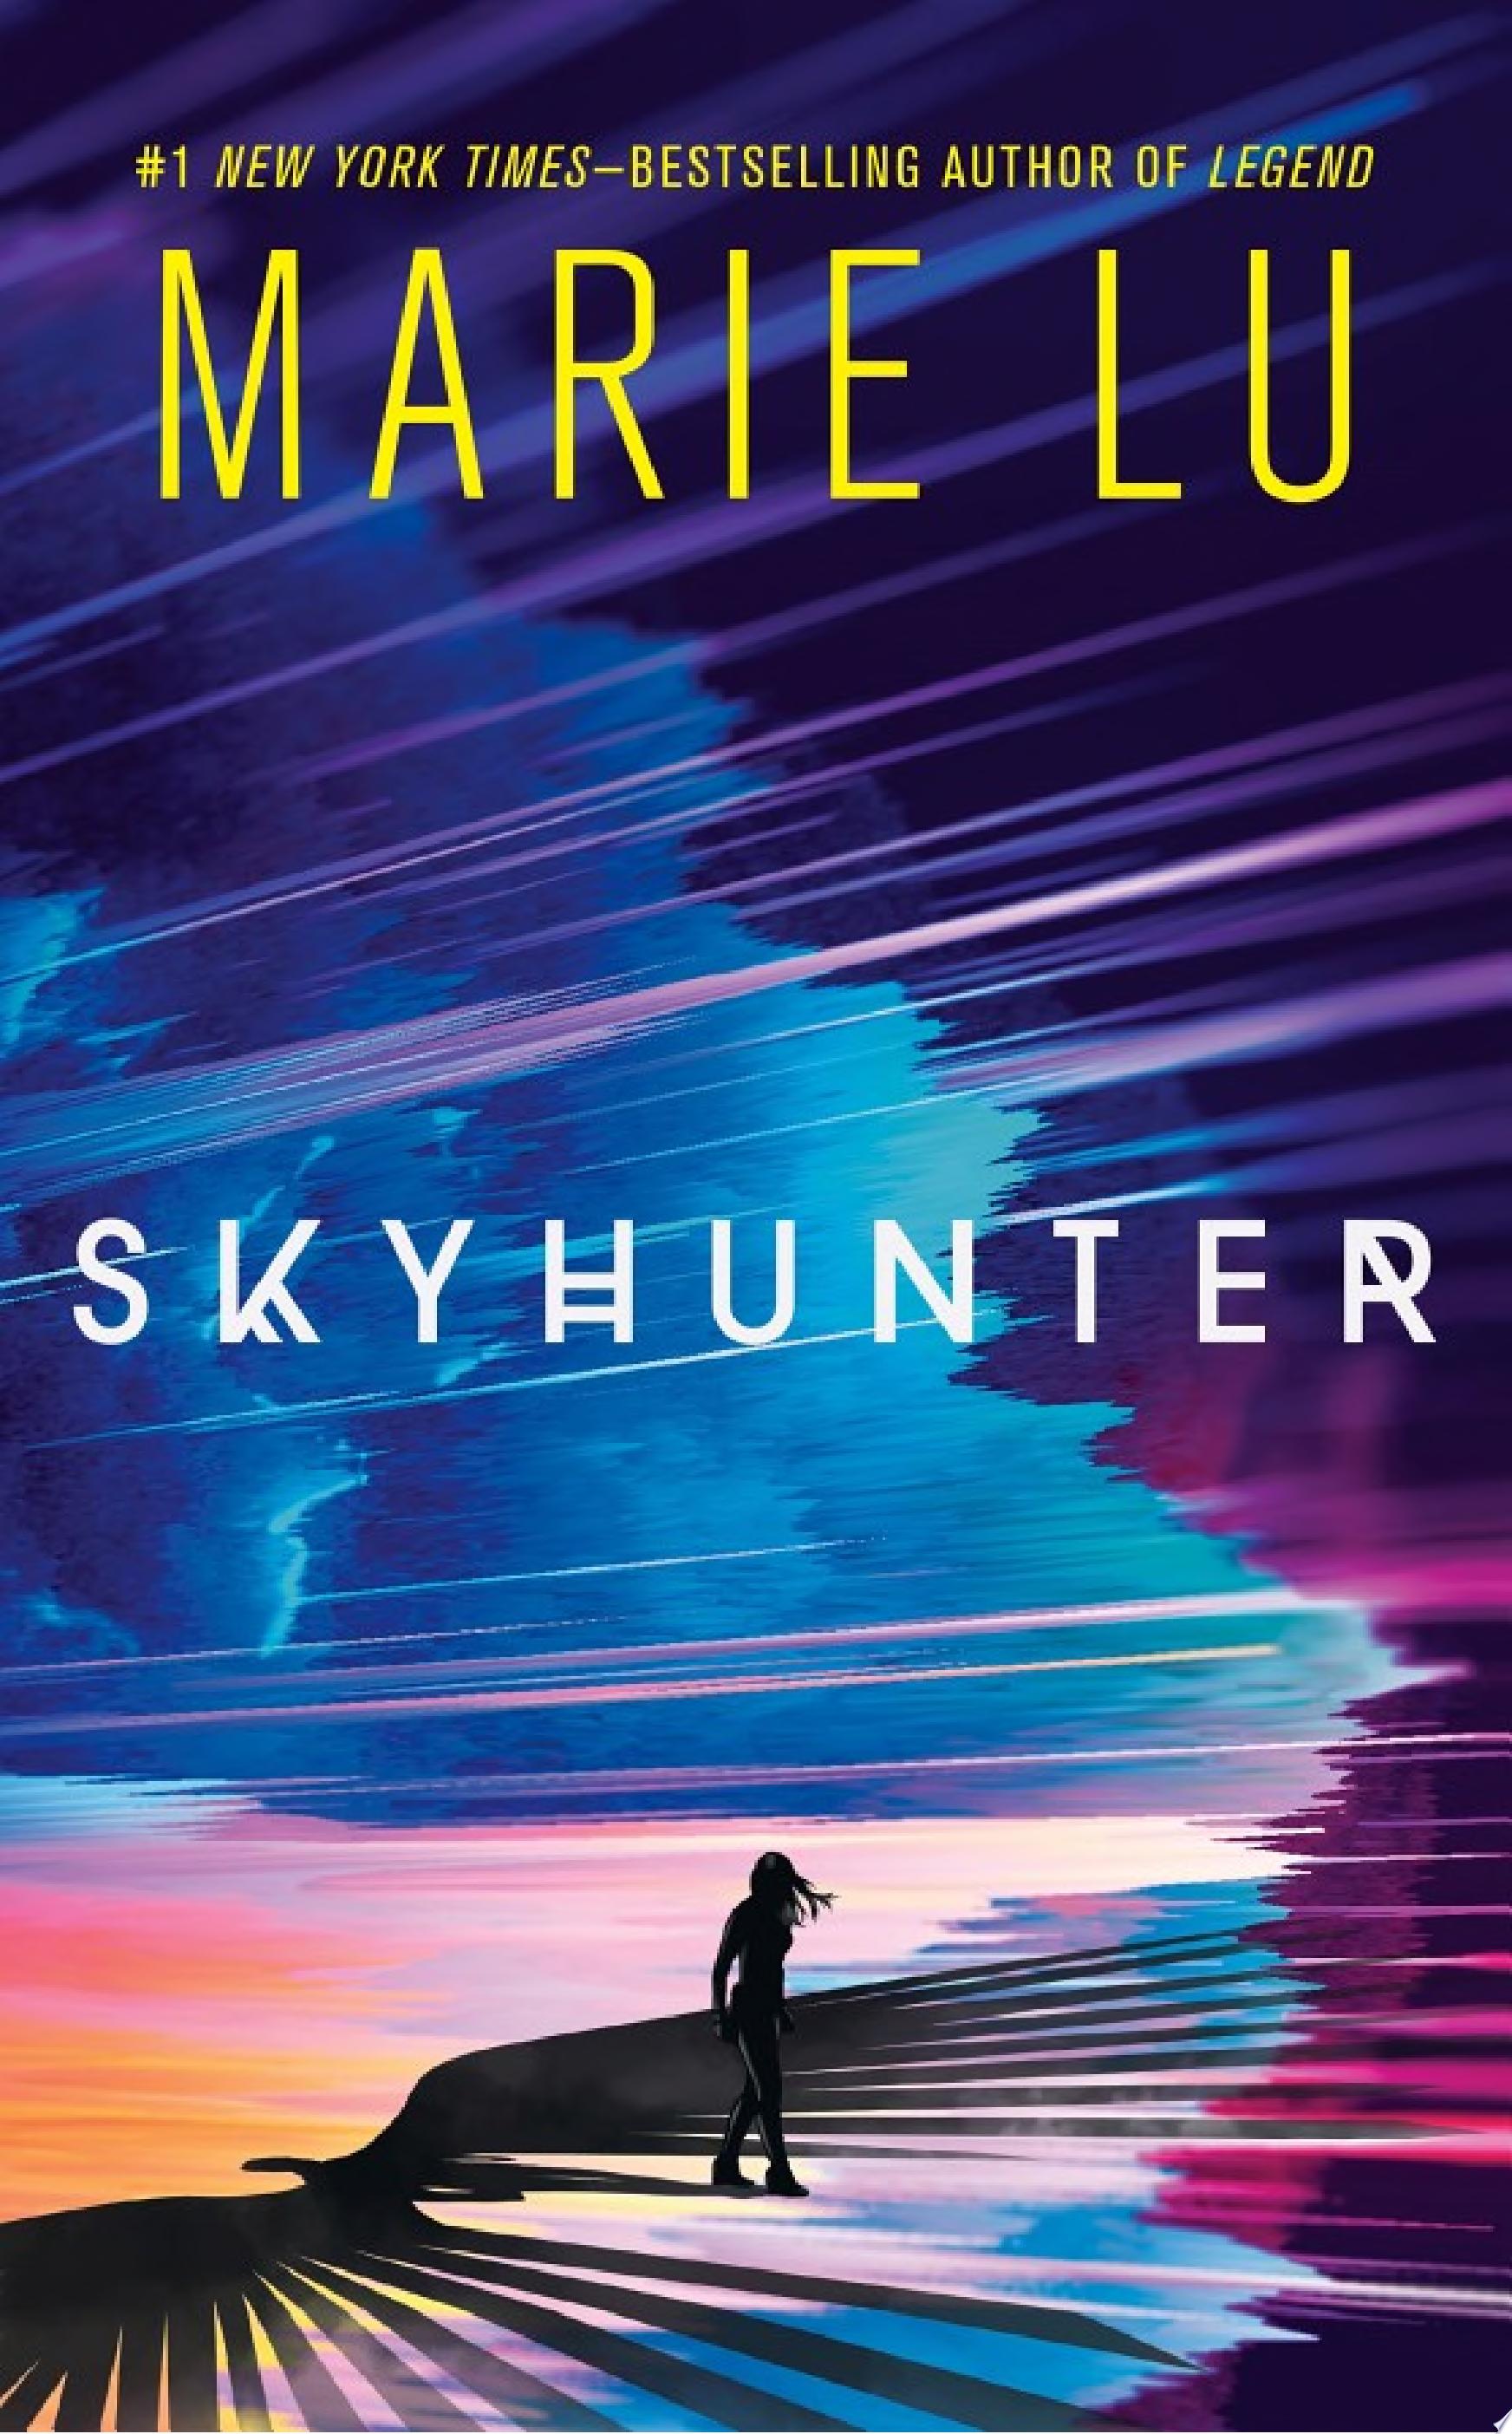 Image for "Skyhunter"